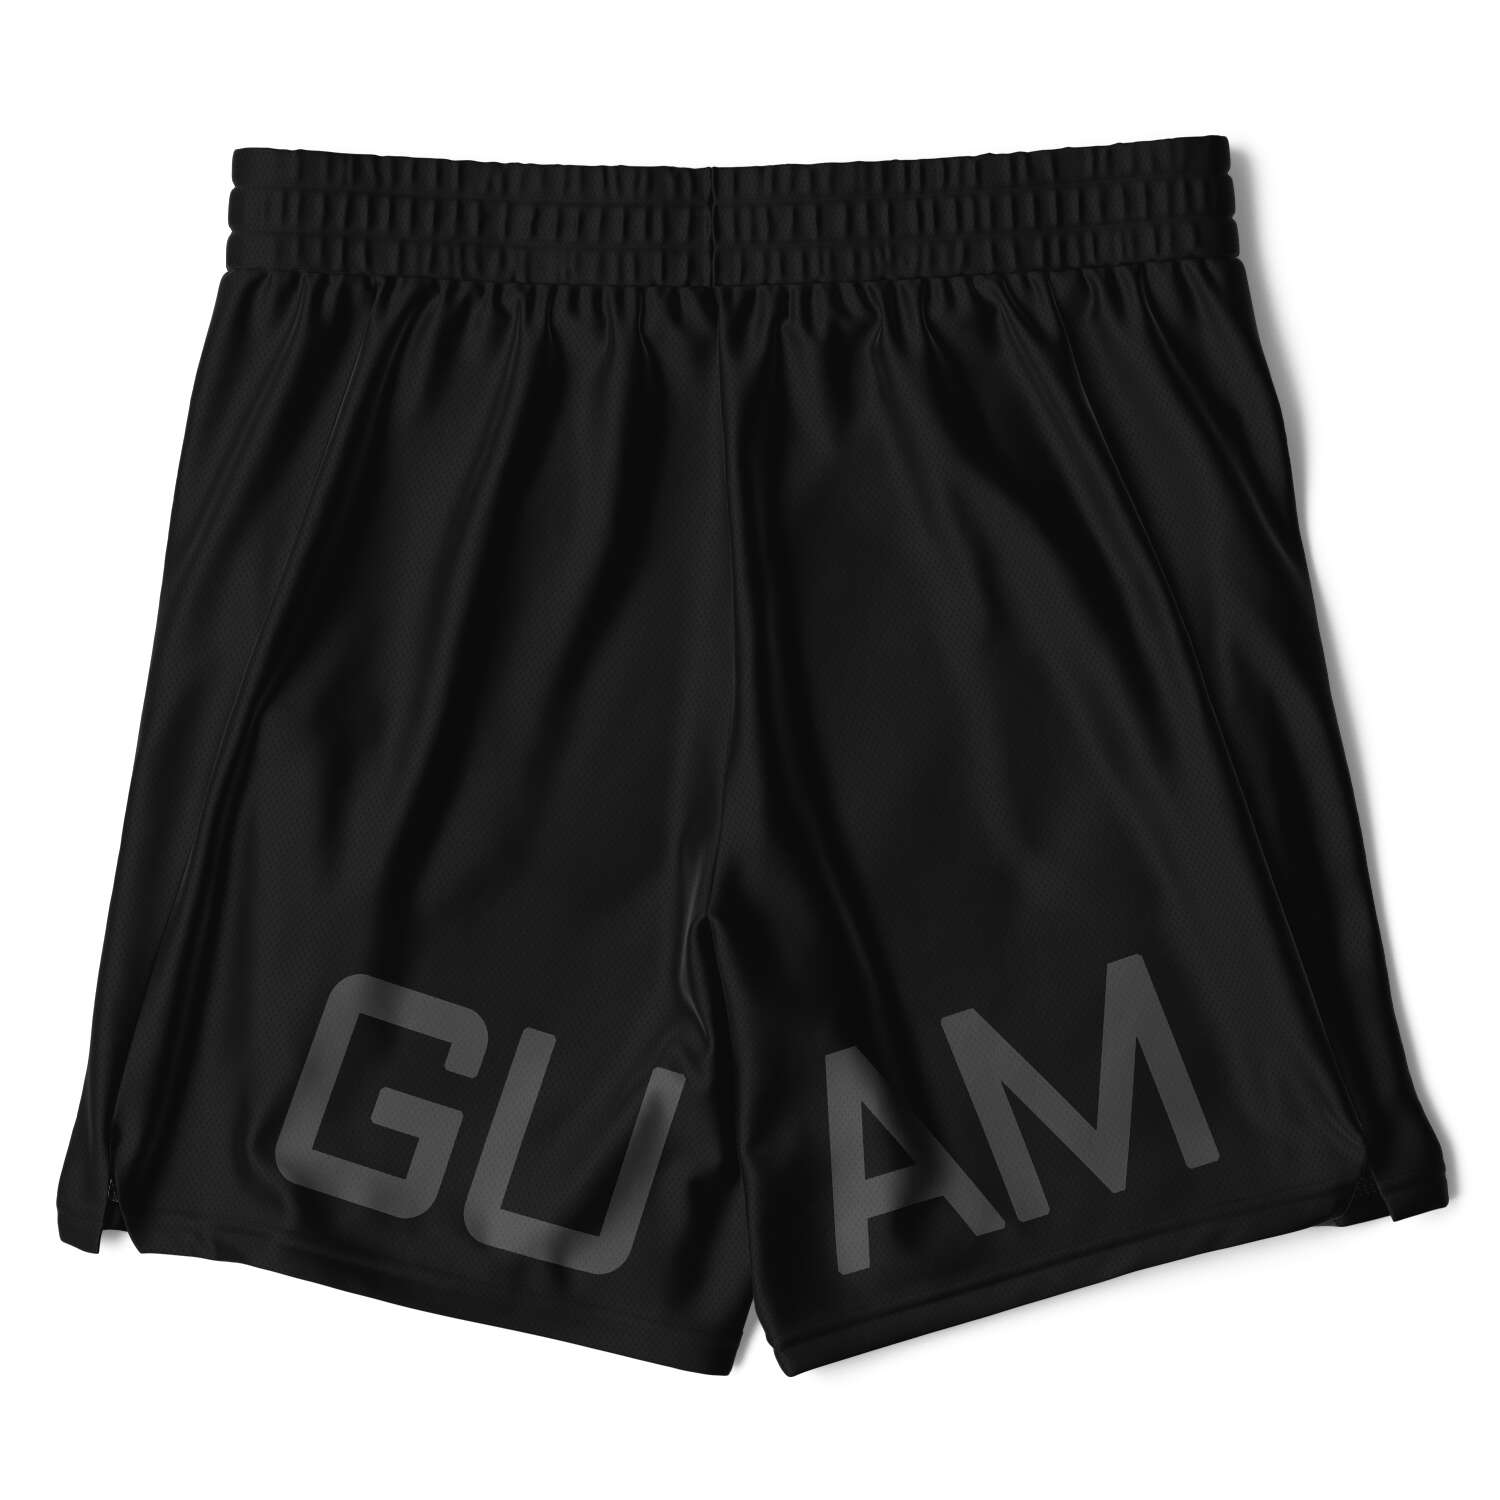 Guam Tribal Layer Black 2-in-1 Phone Pocket Active Shorts